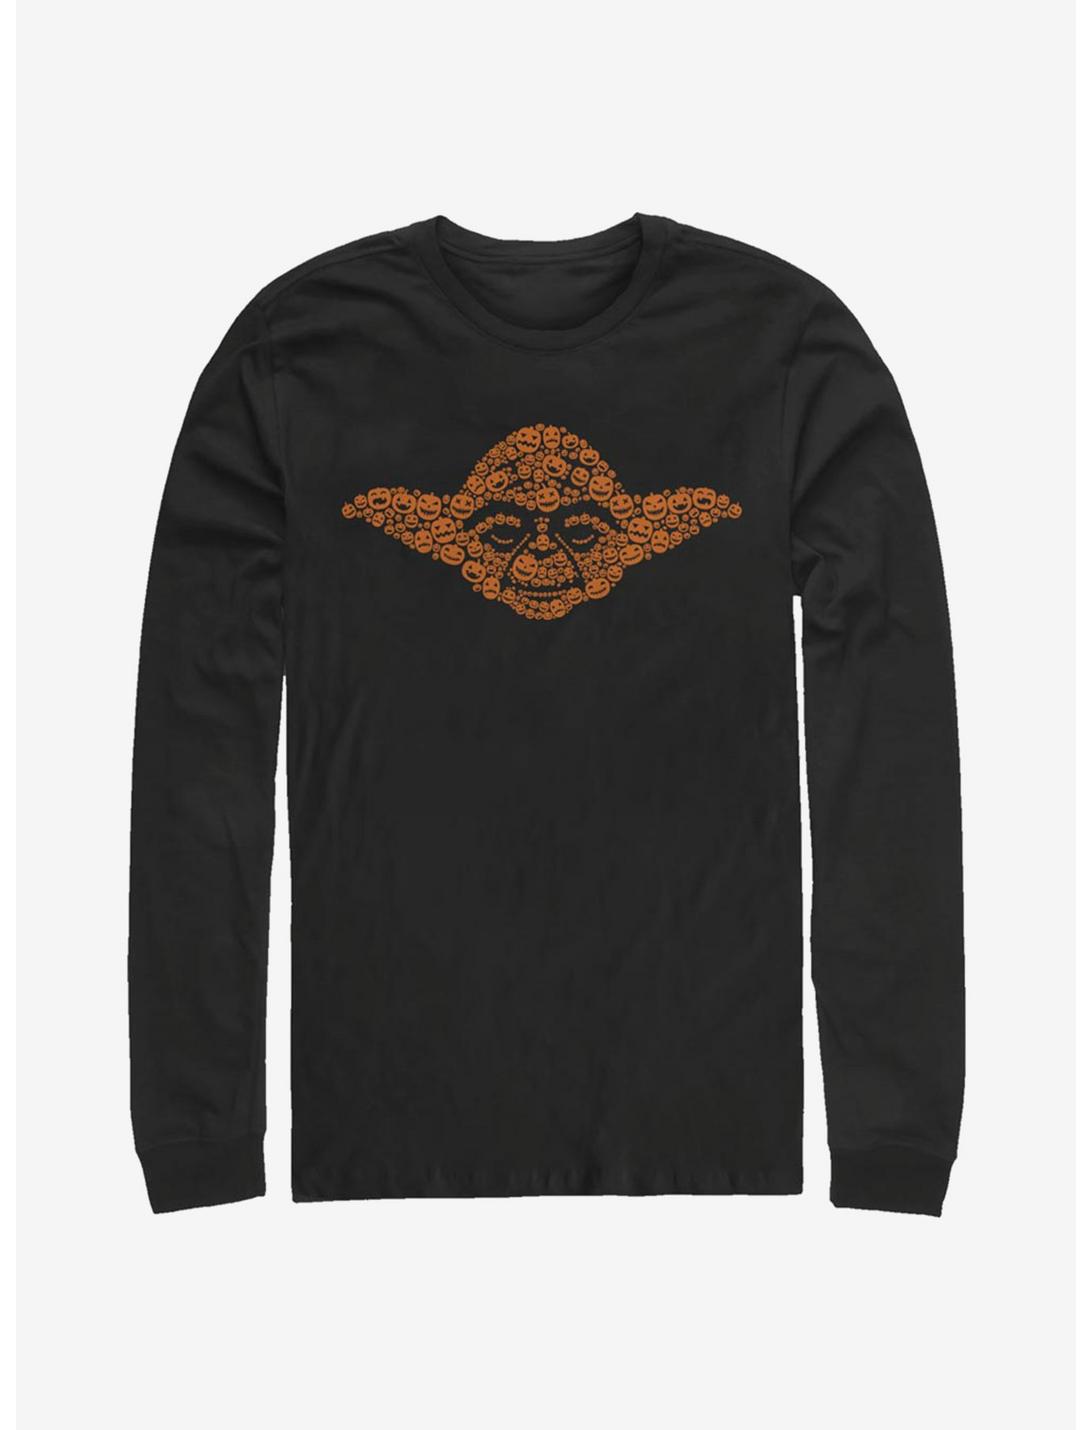 Star Wars Yoda Jackolanterns Long-Sleeve T-Shirt, BLACK, hi-res